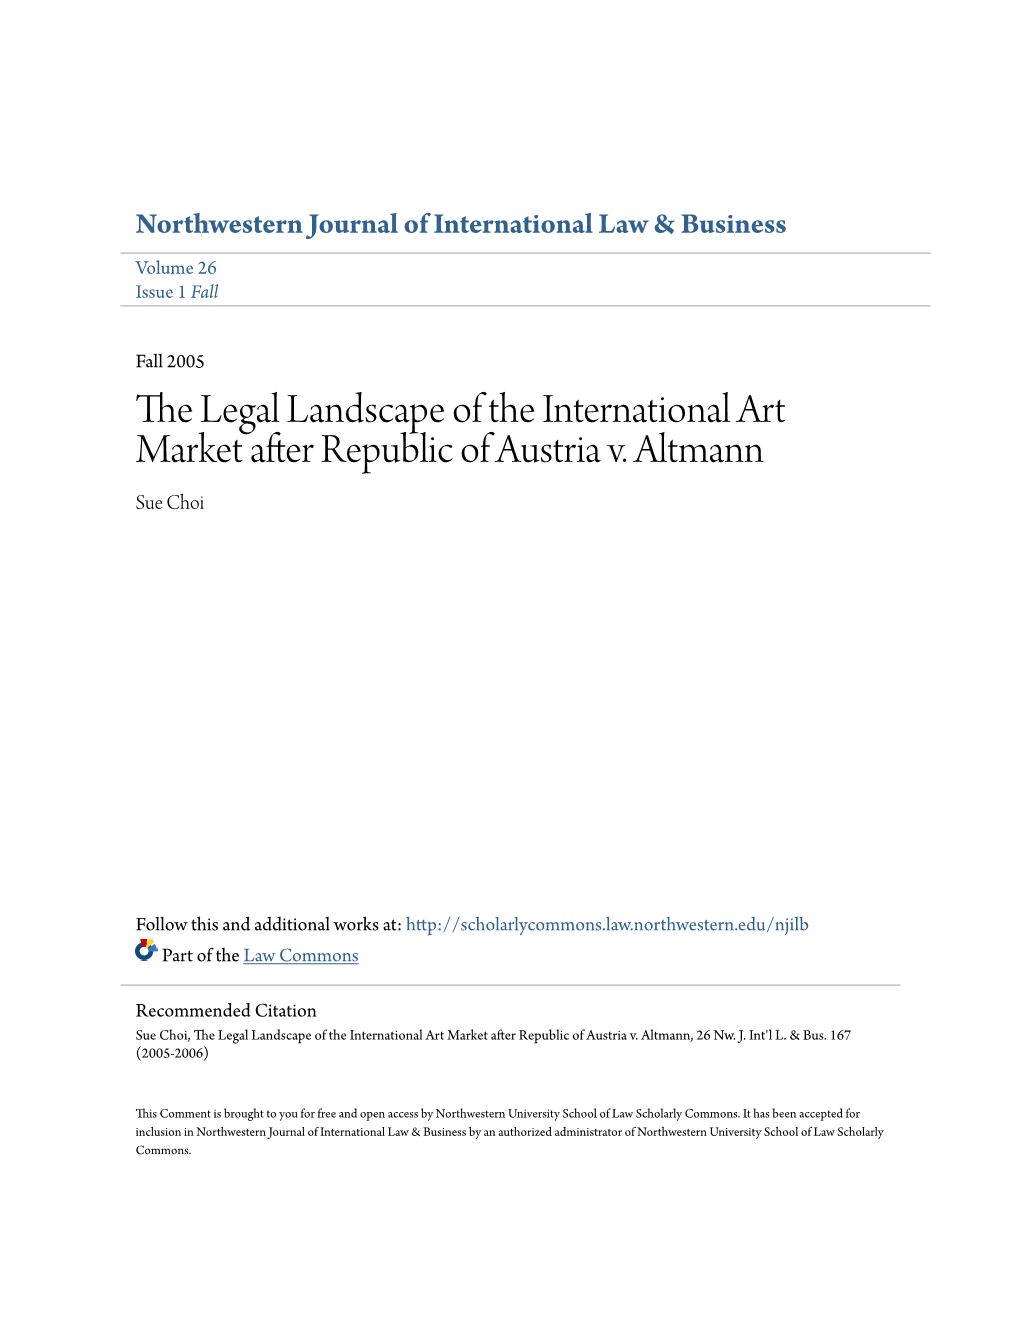 The Legal Landscape of the International Art Market After Republic of Austria V